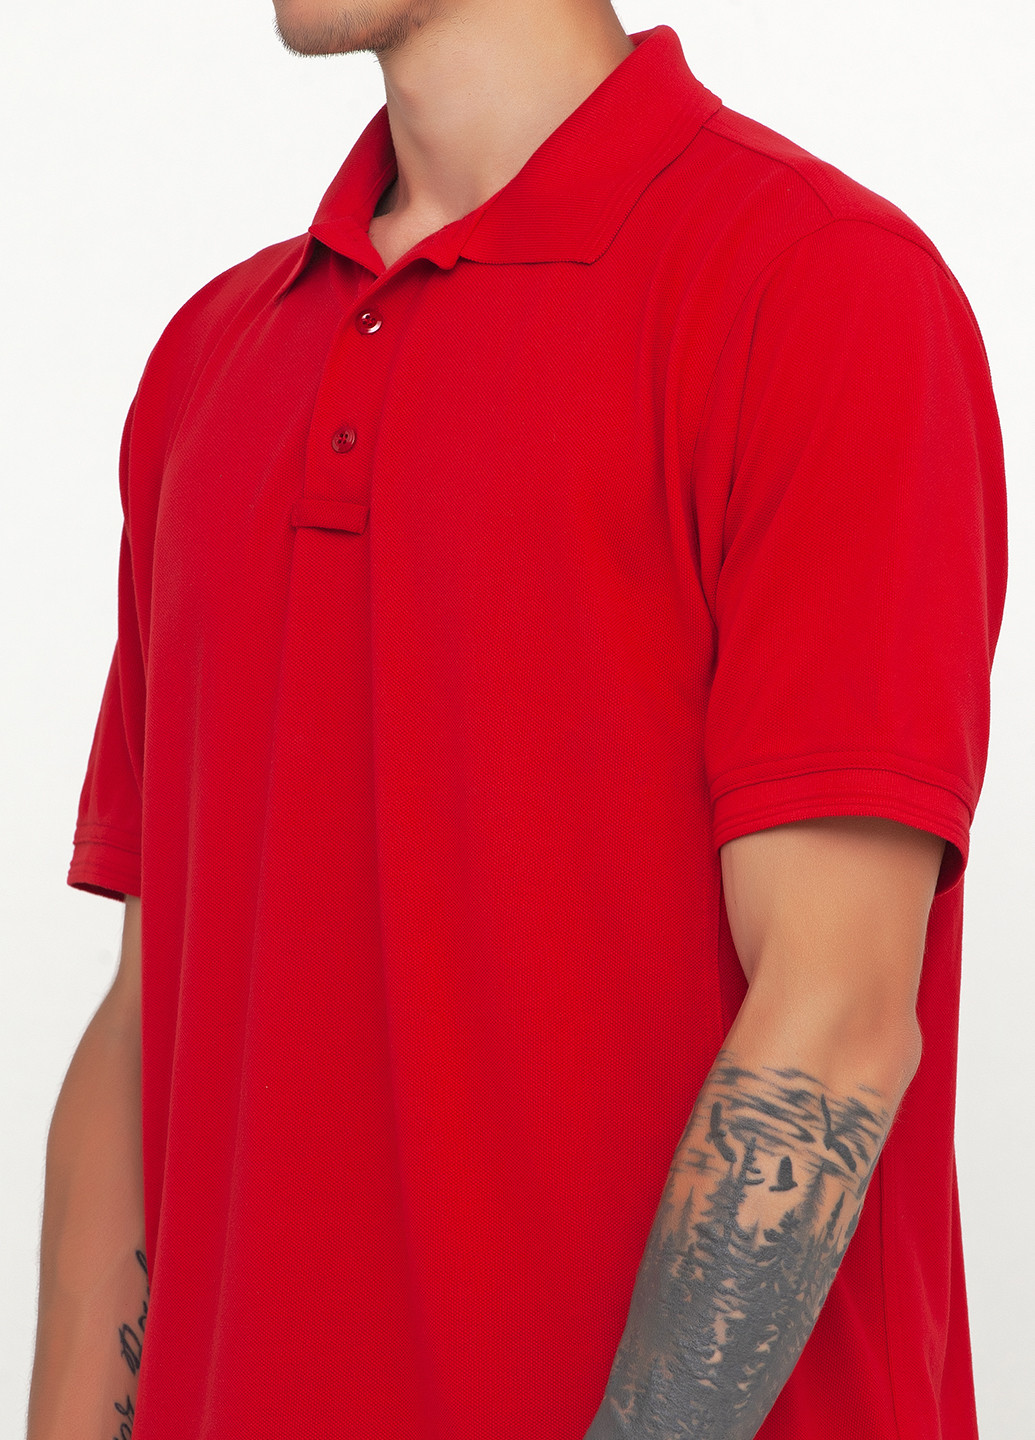 Красная футболка-поло для мужчин Perfection однотонная